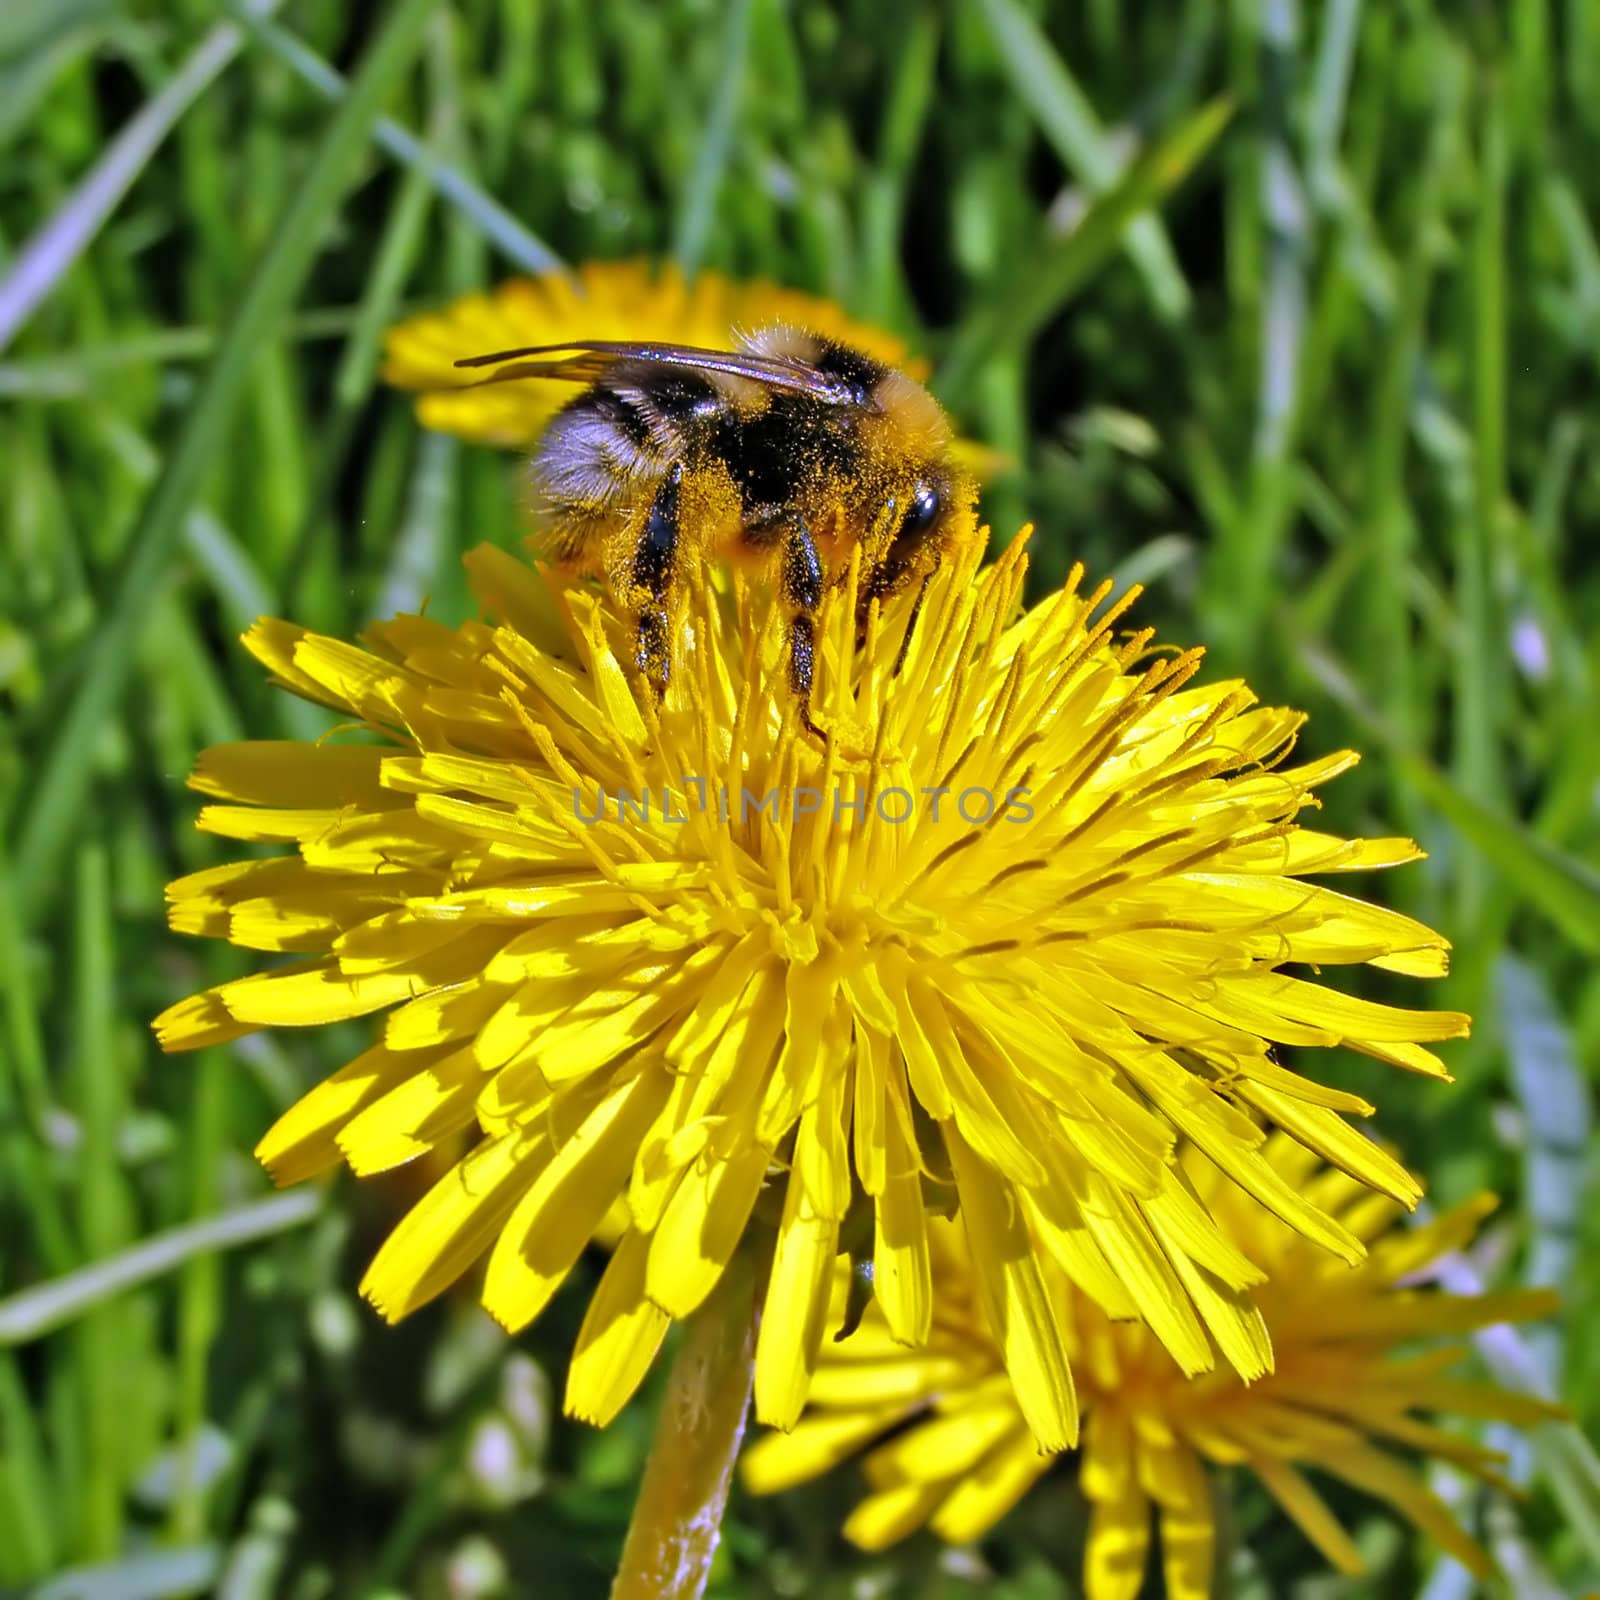 bumblebee on dandelion by basel101658